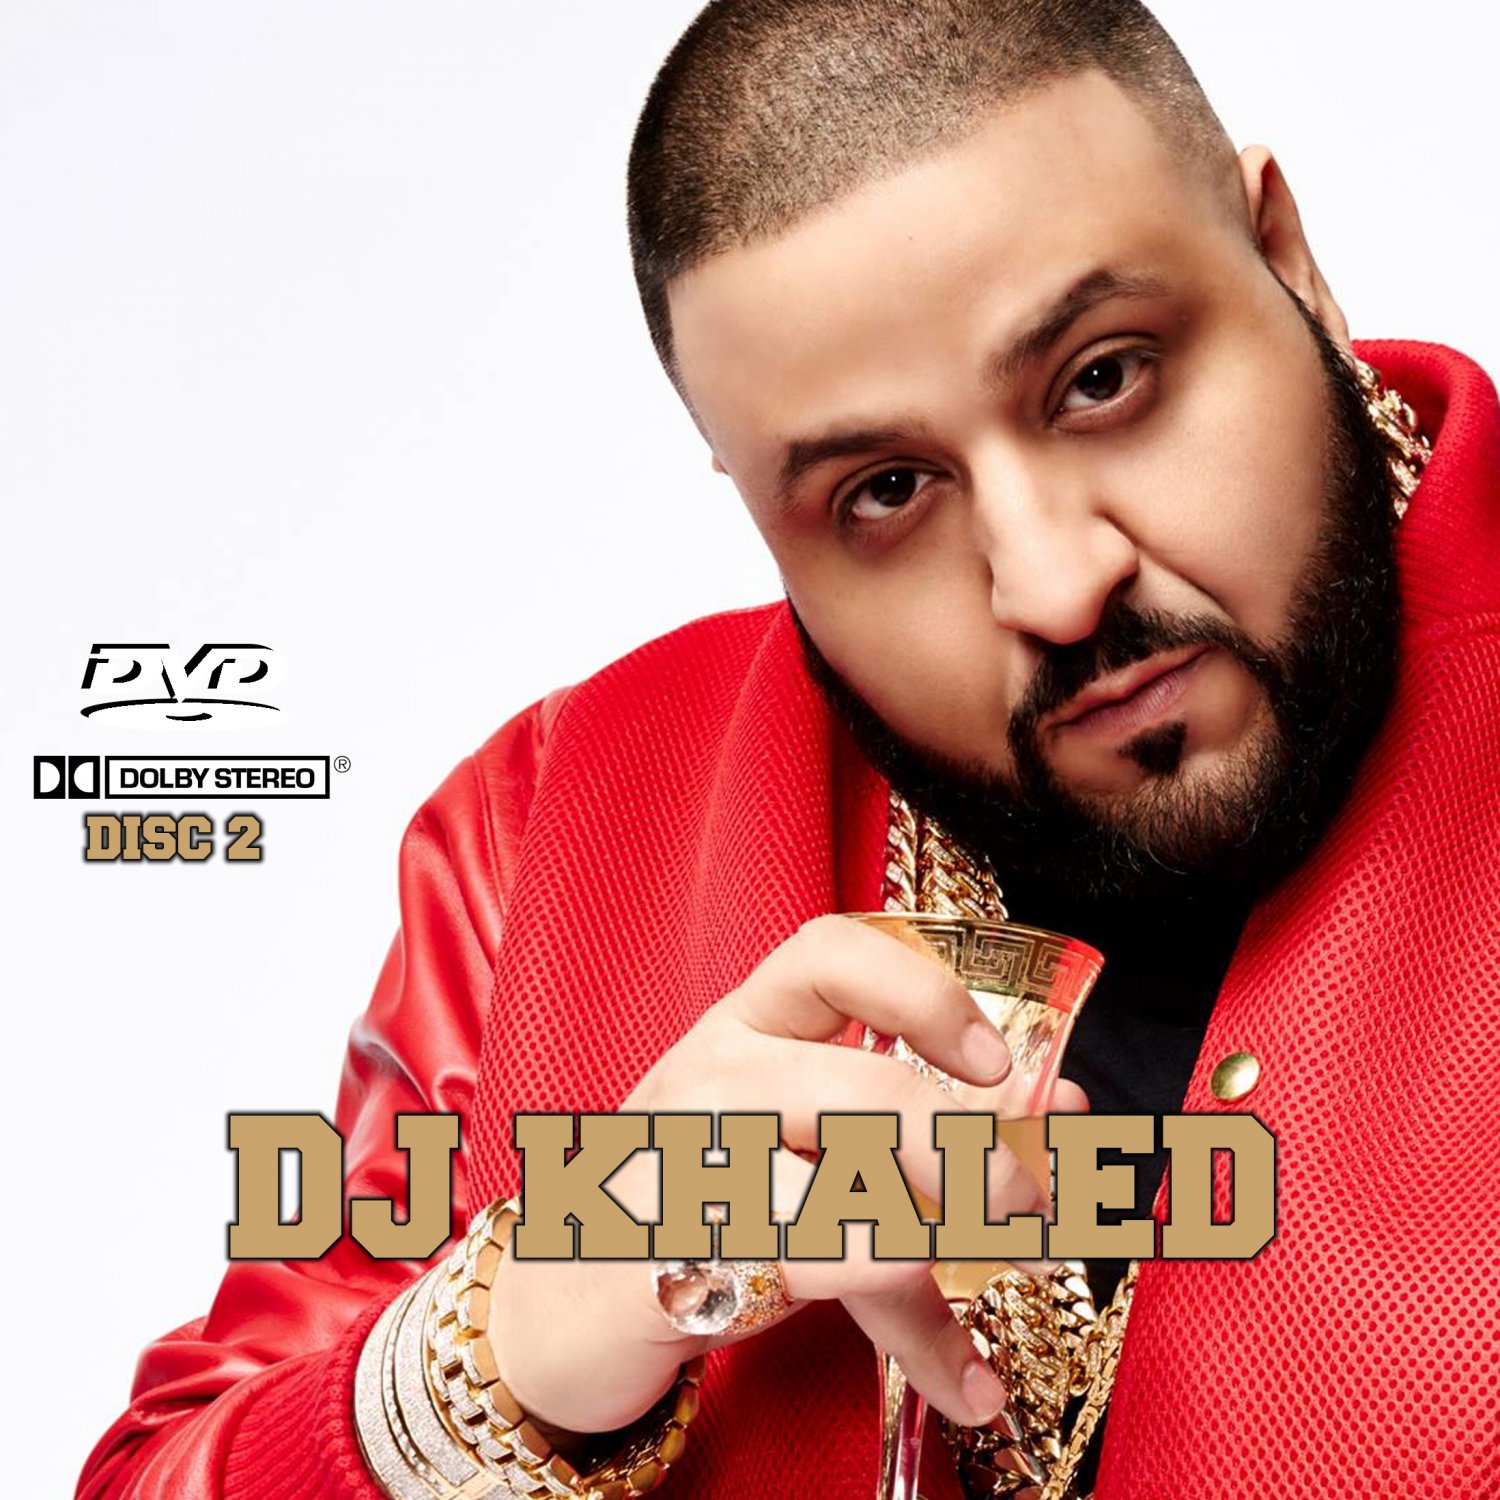 DJ Khaled Music Videos Collection (3 DVD's) 57 Music Videos